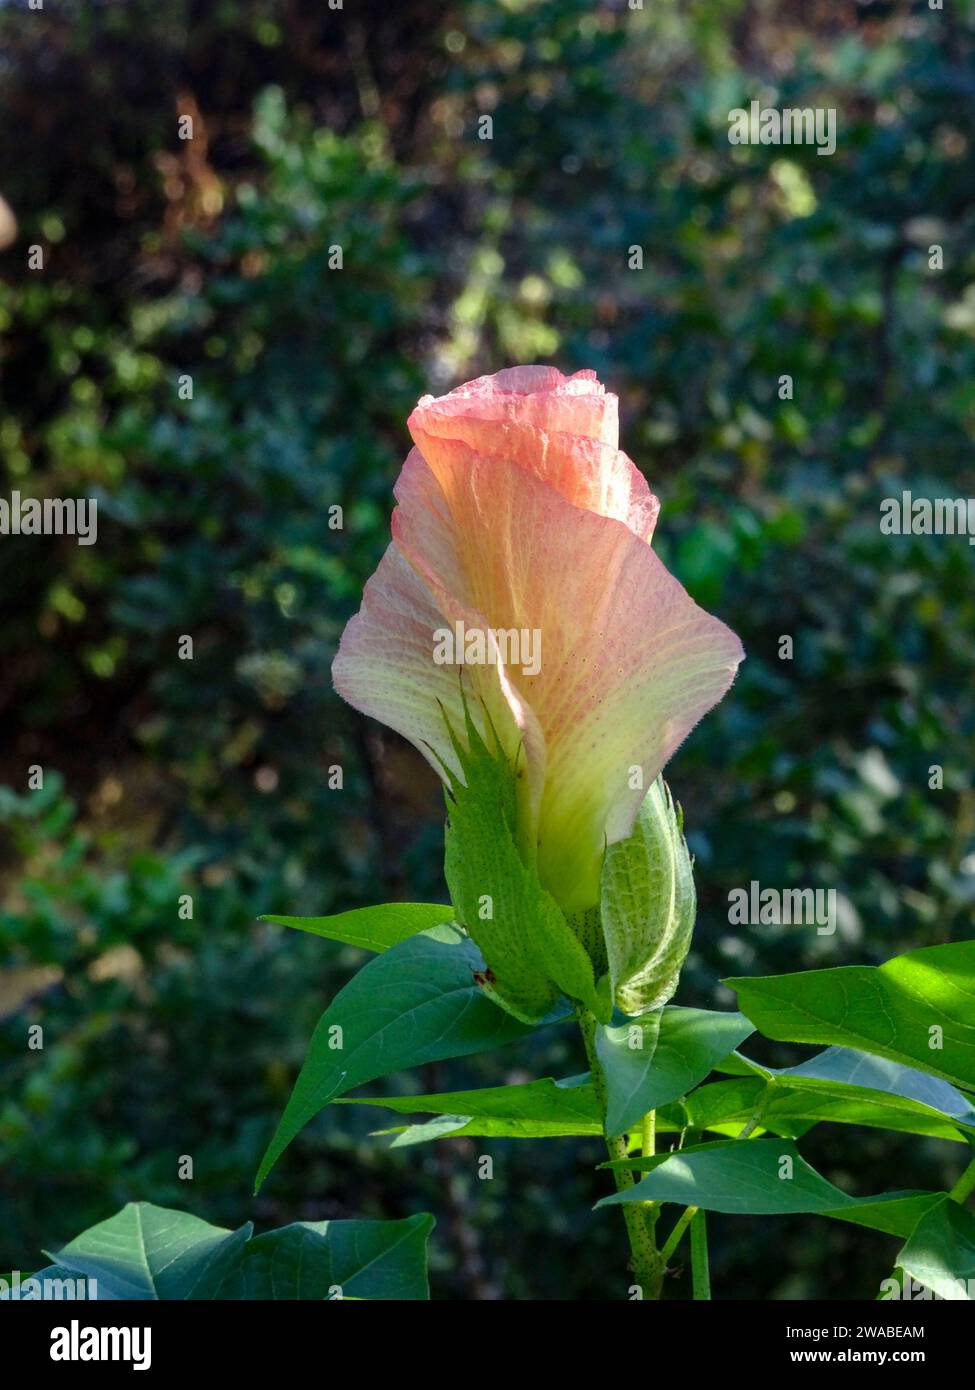 Lovely upright flower of Algodon Cotton. Natural close up flowering plant portrait in lovely sunshine Stock Photo